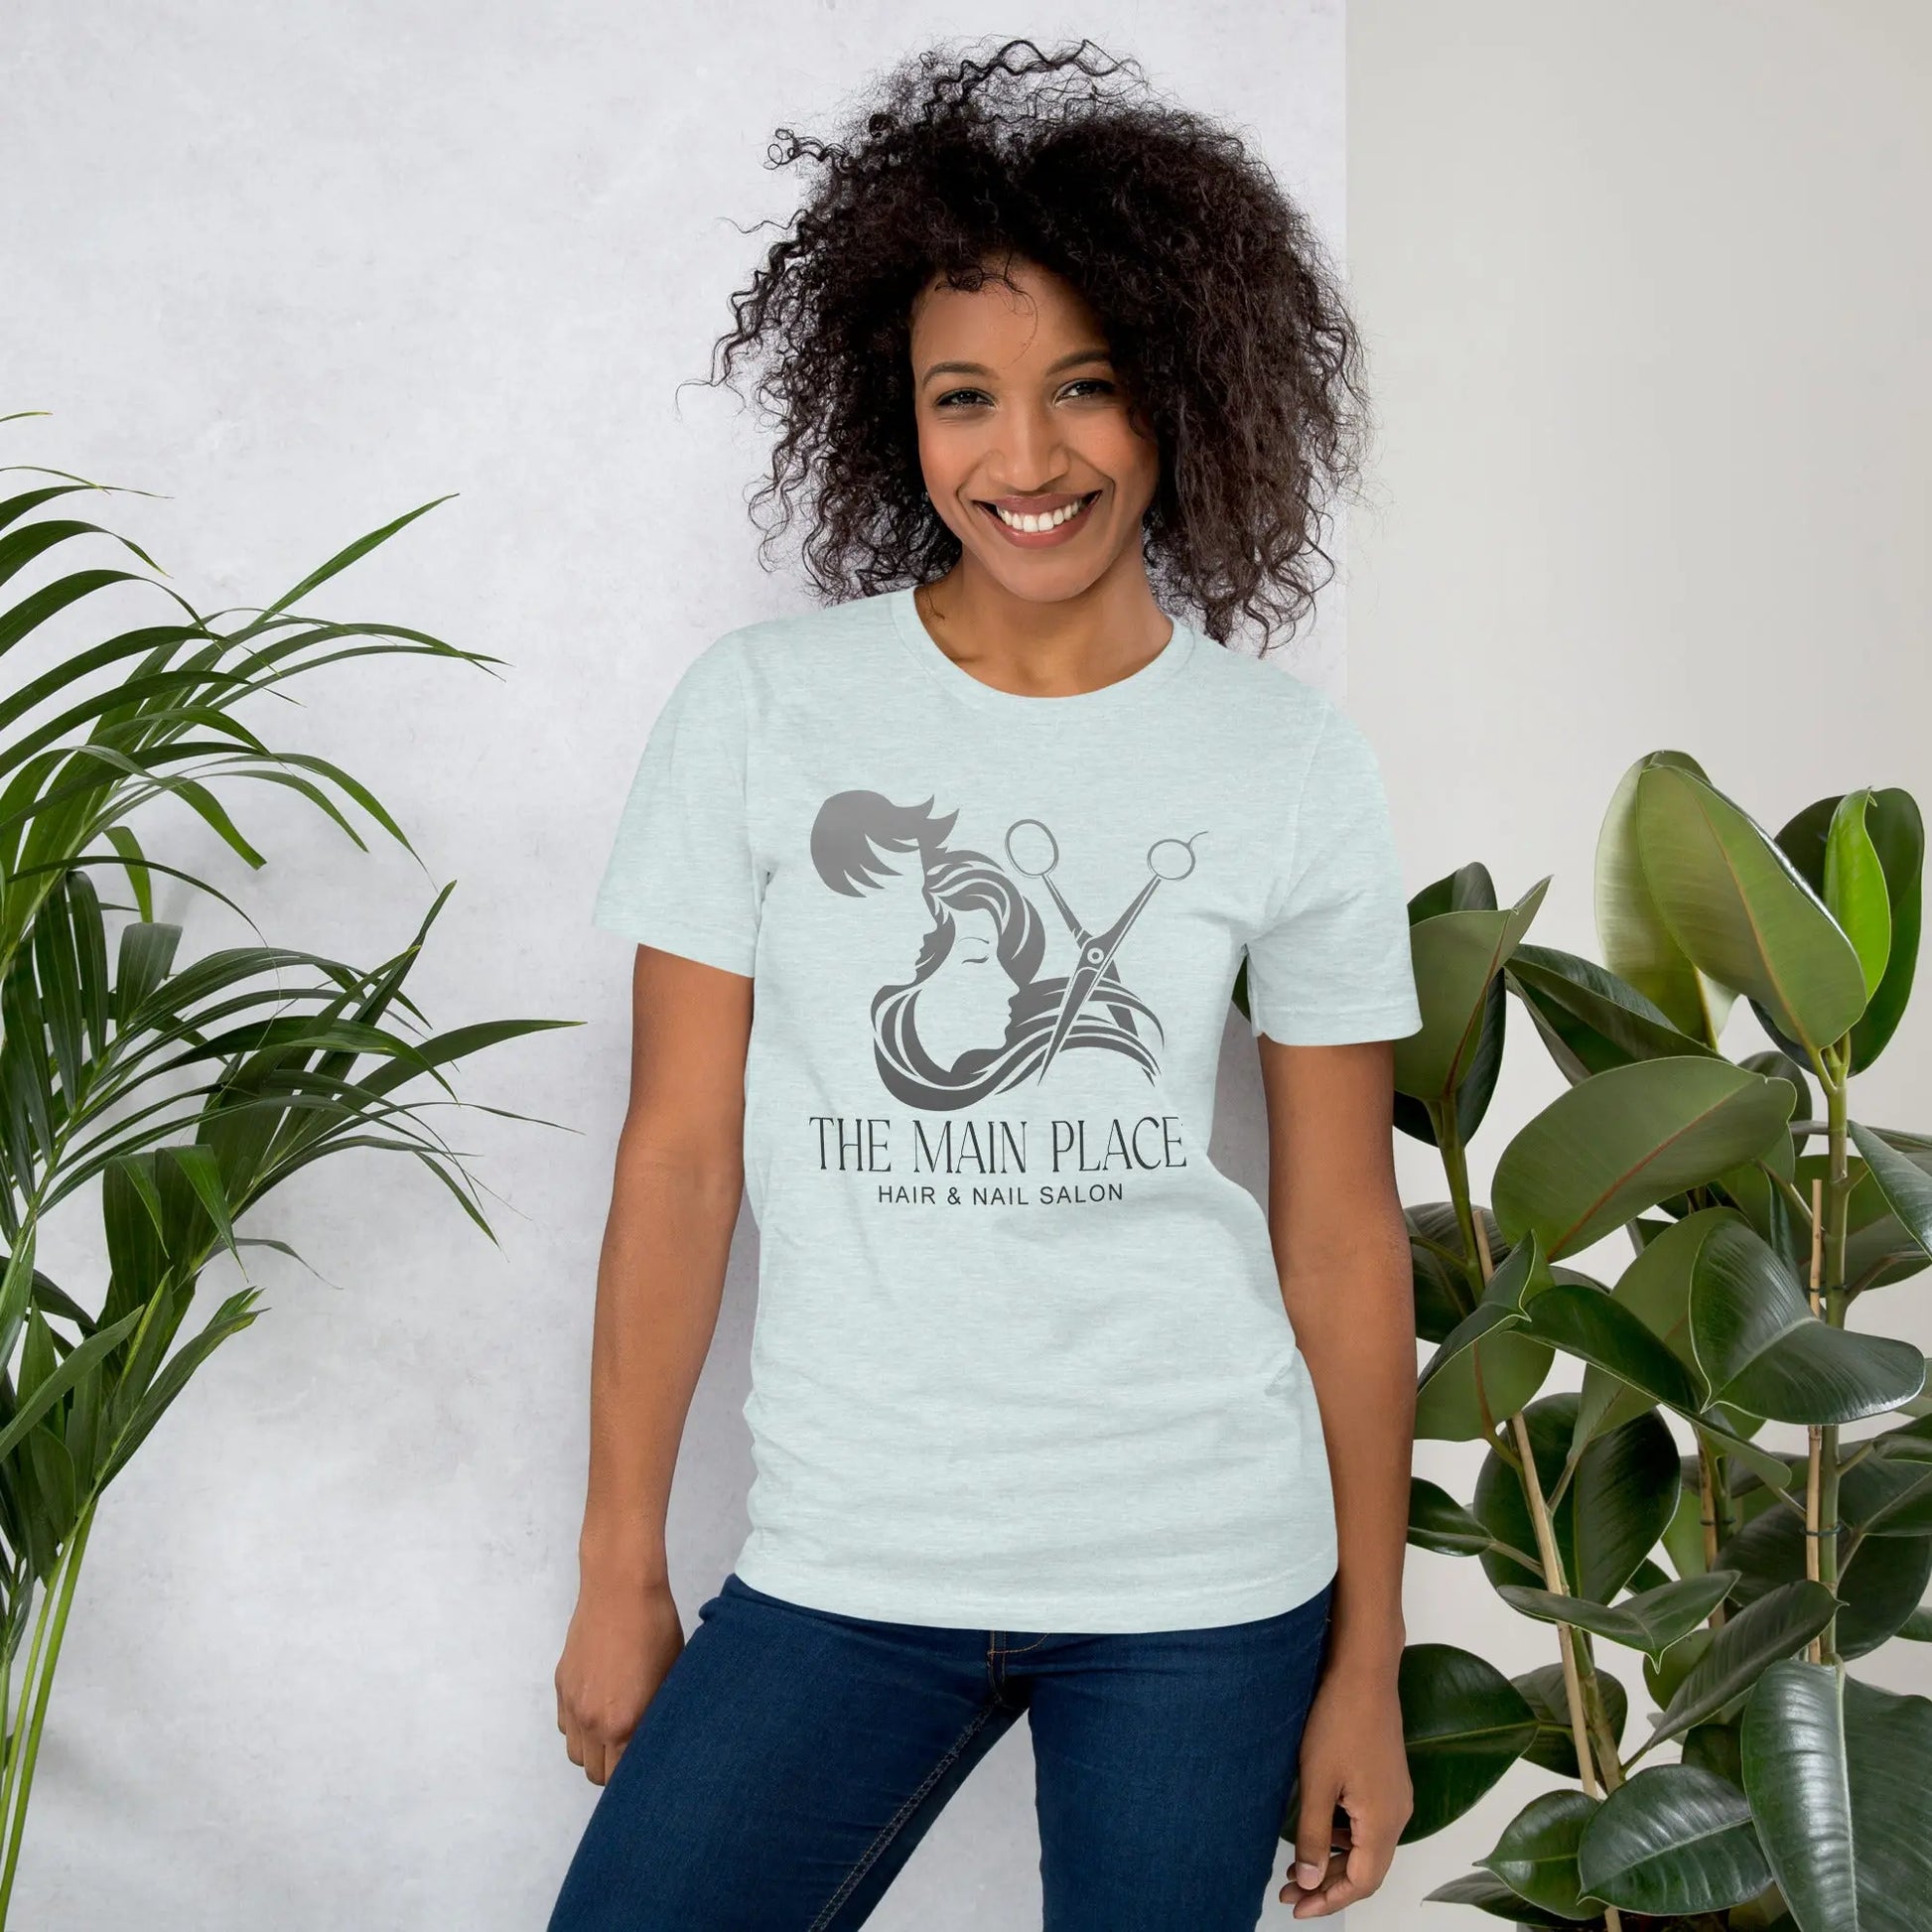 Hair Salon Personalized Unisex t-shirt Amazing Faith Designs